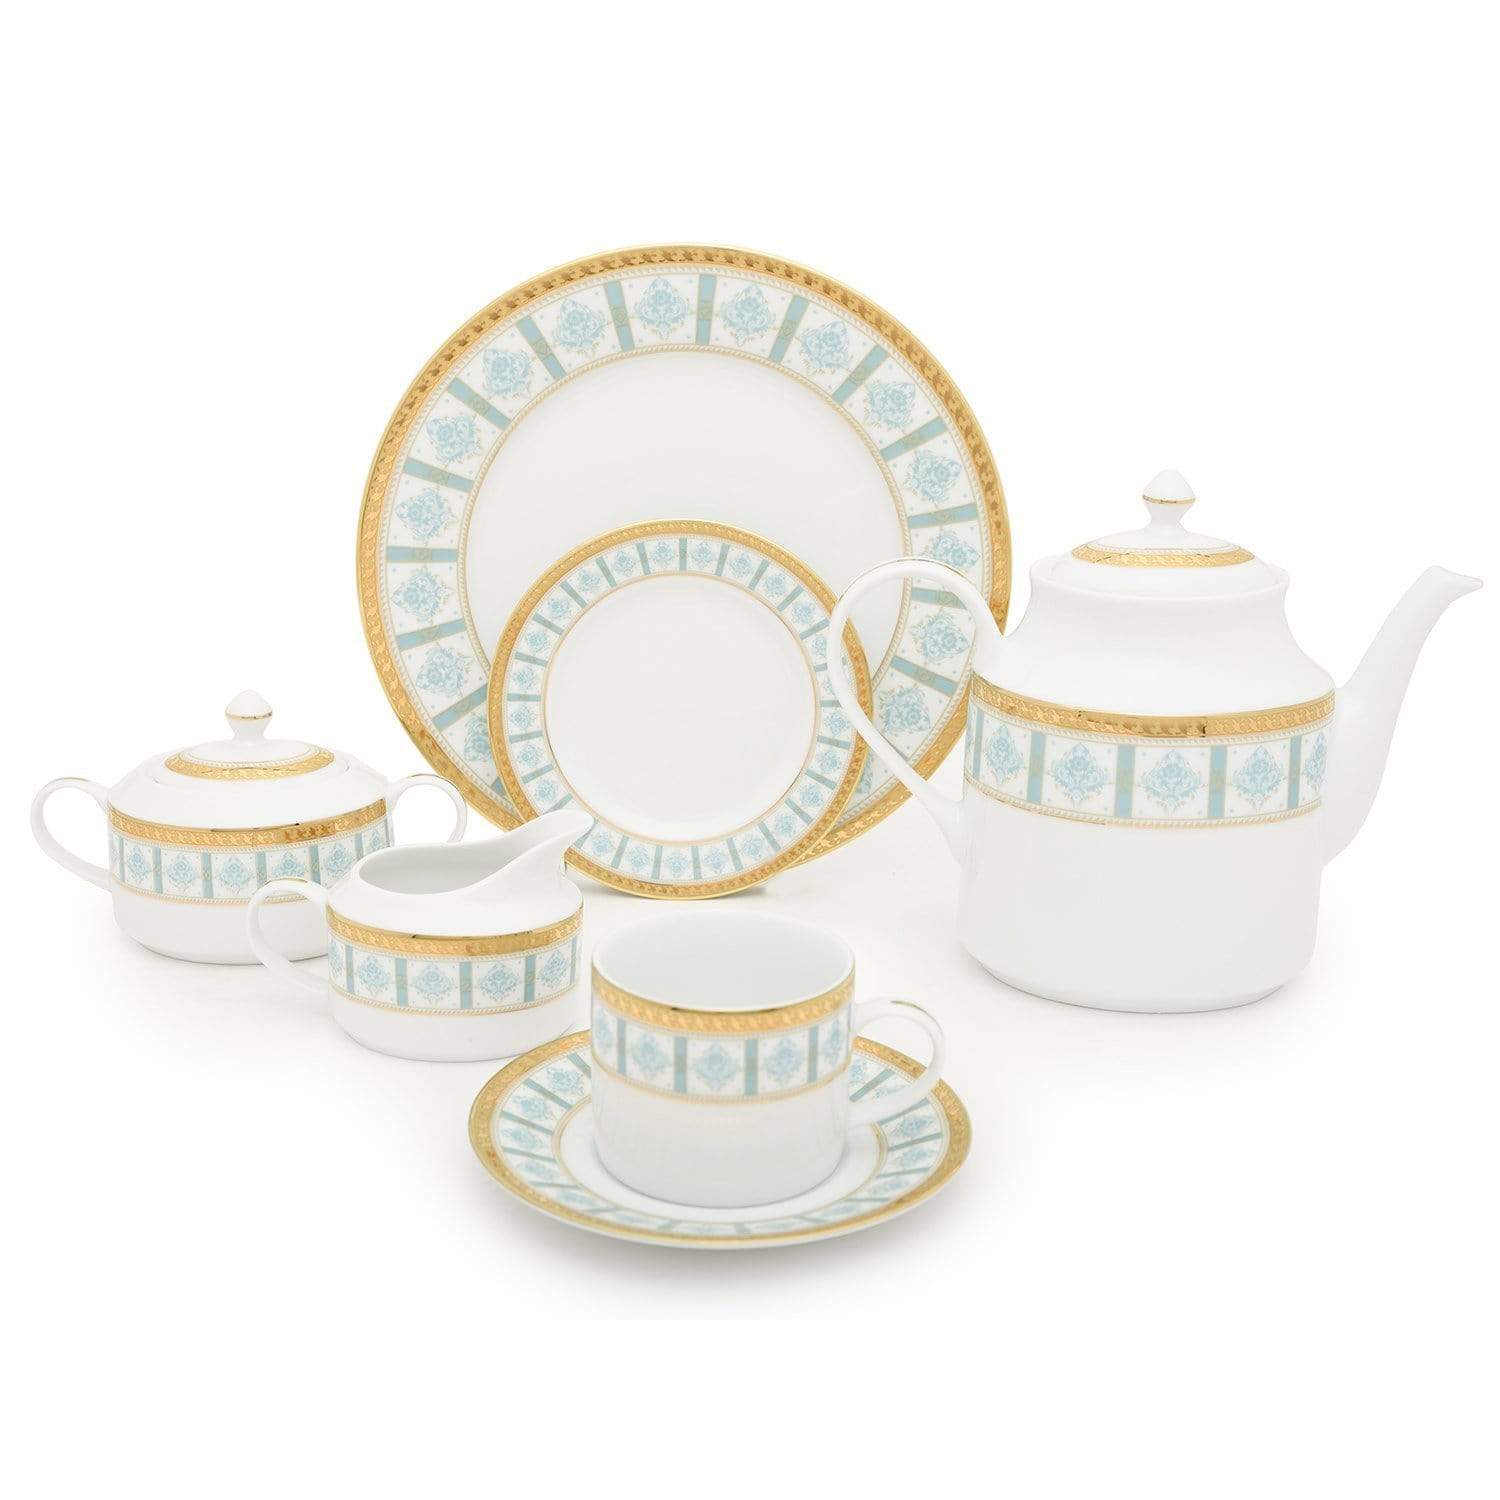 Dankotuwa Porcelain Moira Tea Set - Light Blue and Gold, 24 Piece - MOI-24TS - Jashanmal Home